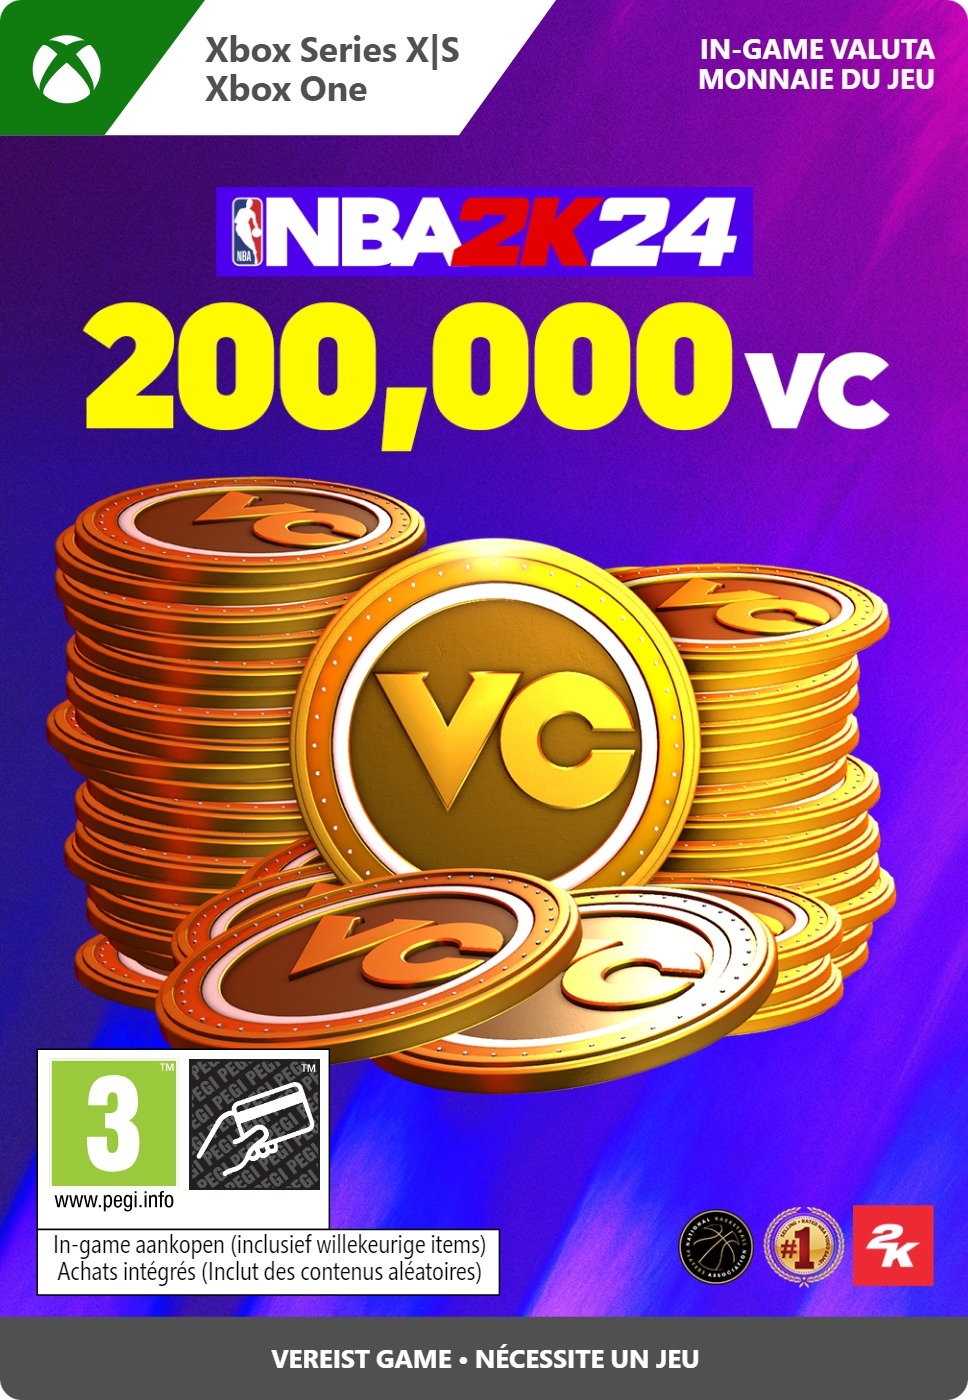 200.000 Xbox NBA 2K24 VC - Xbox Series X|S/One (direct digitaal geleverd)